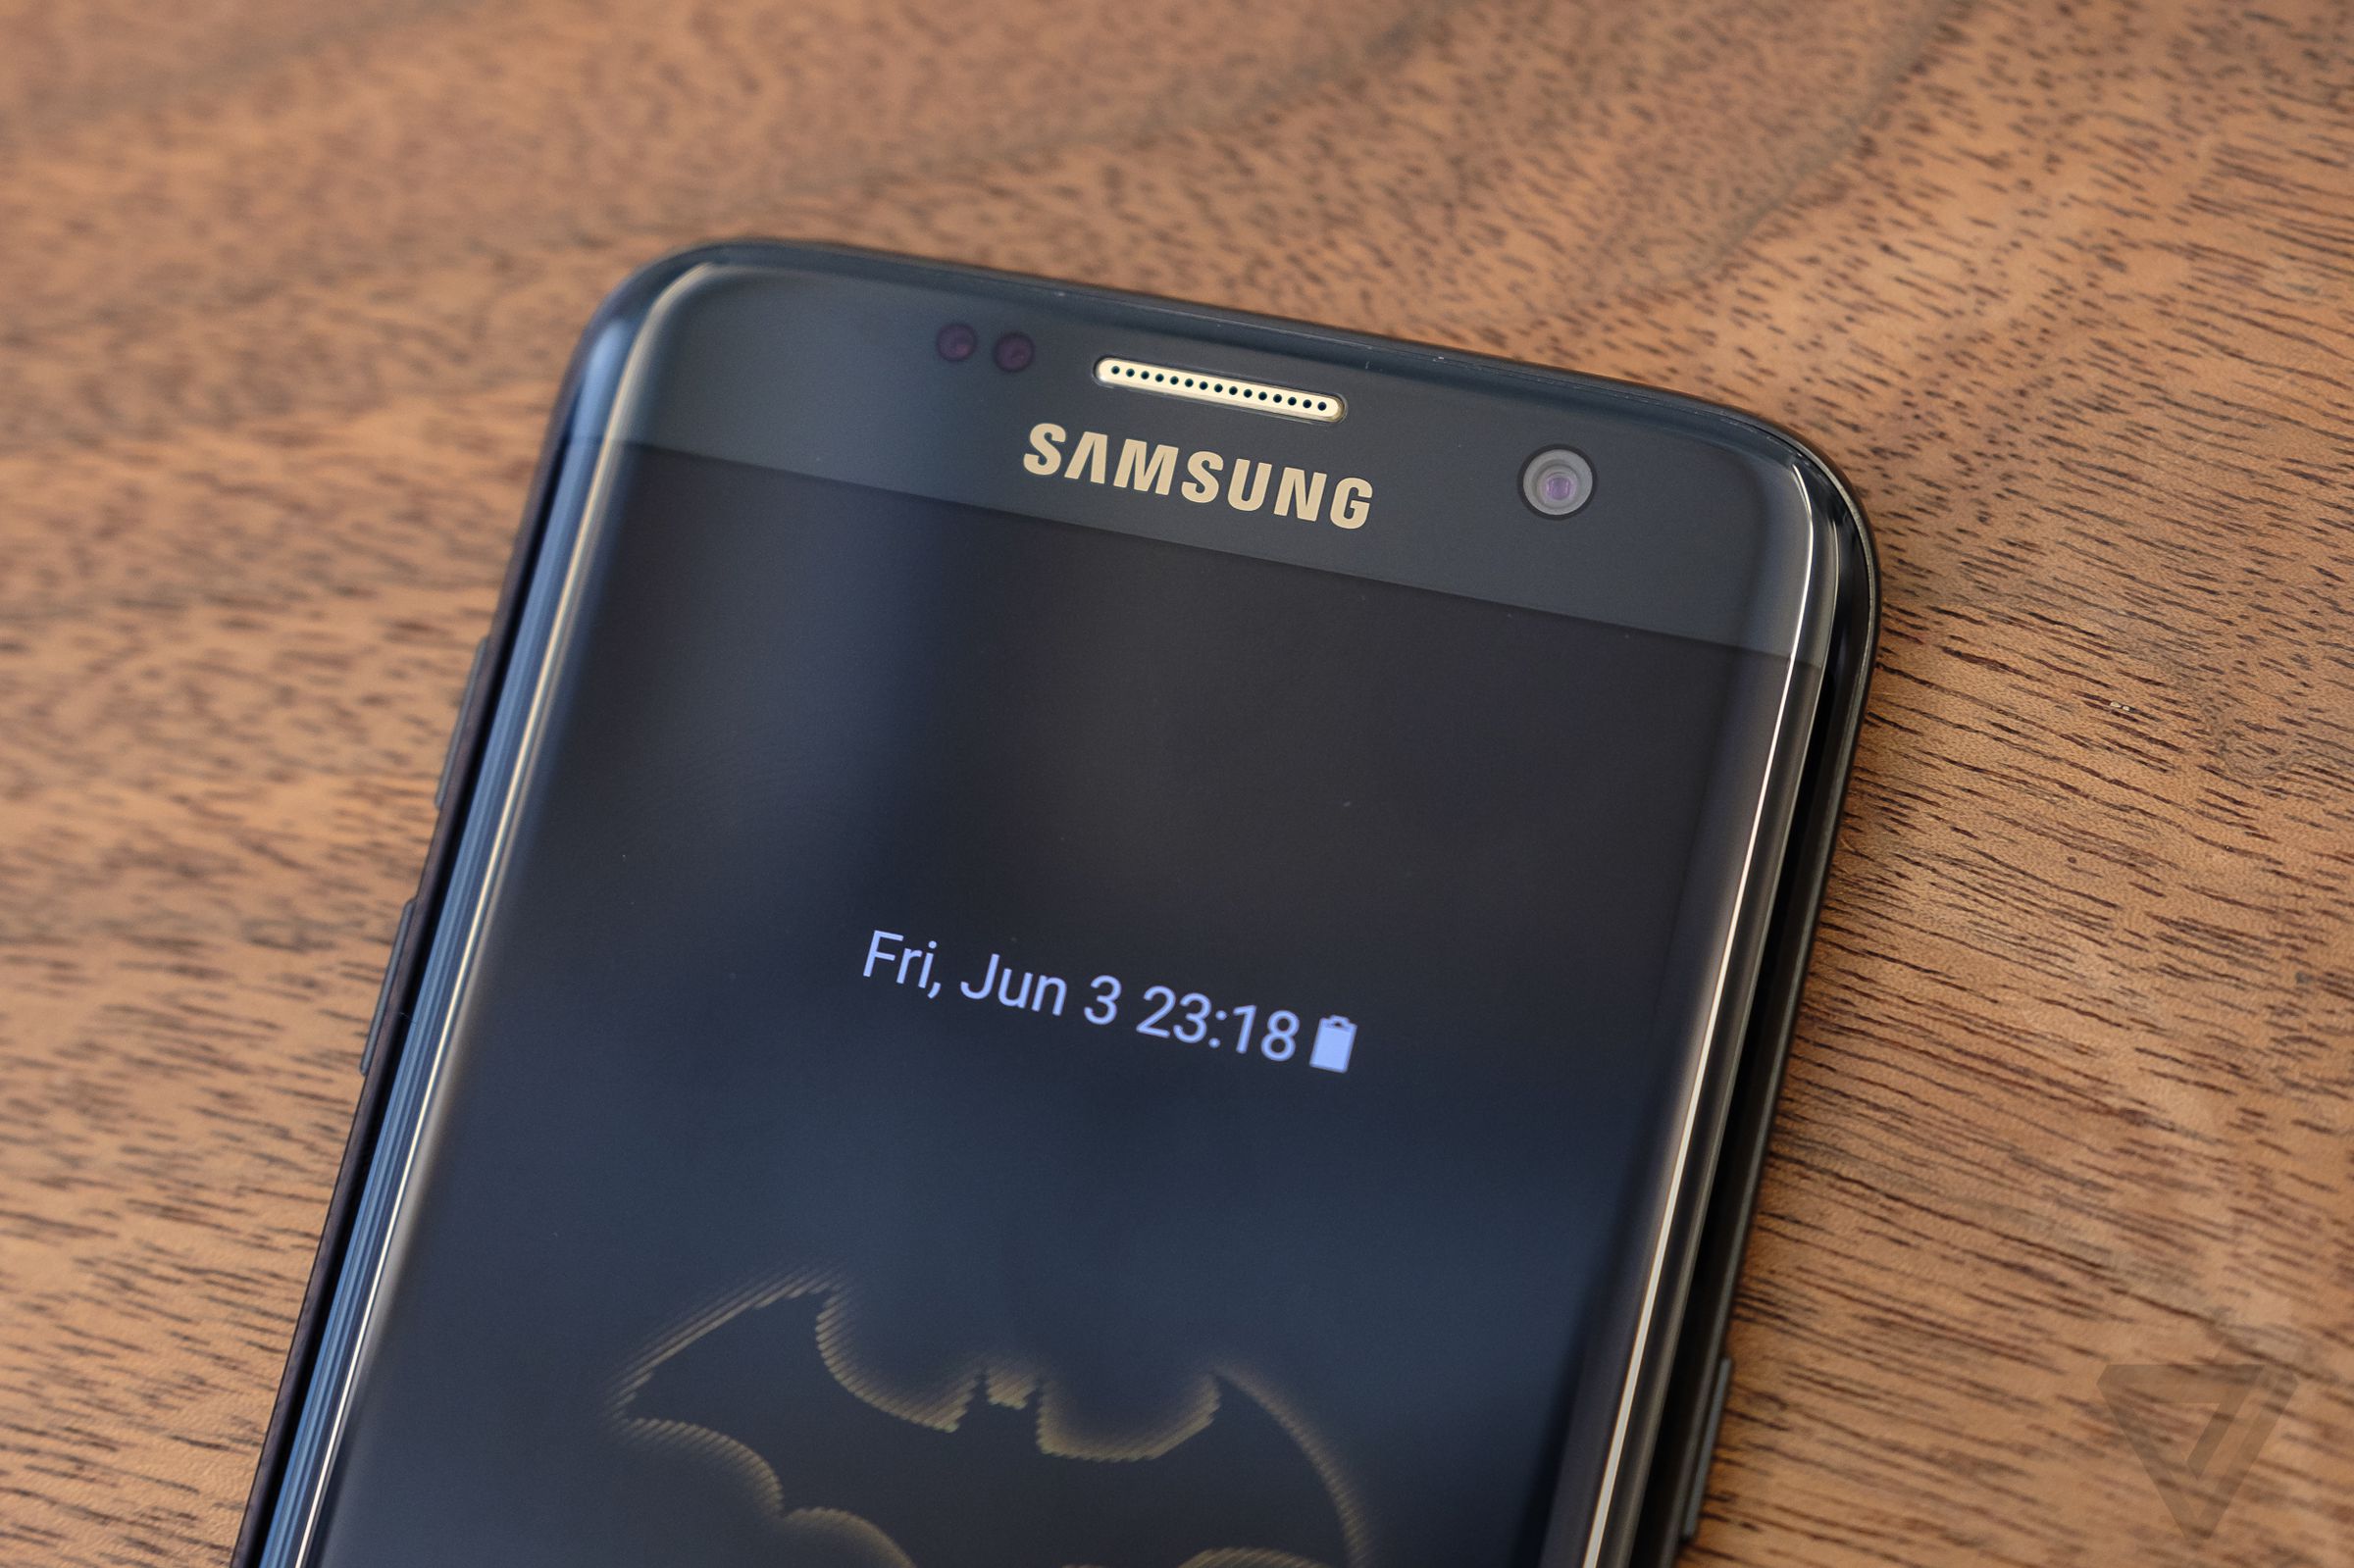 Samsung Galaxy S7 Edge Injustice Edition photos